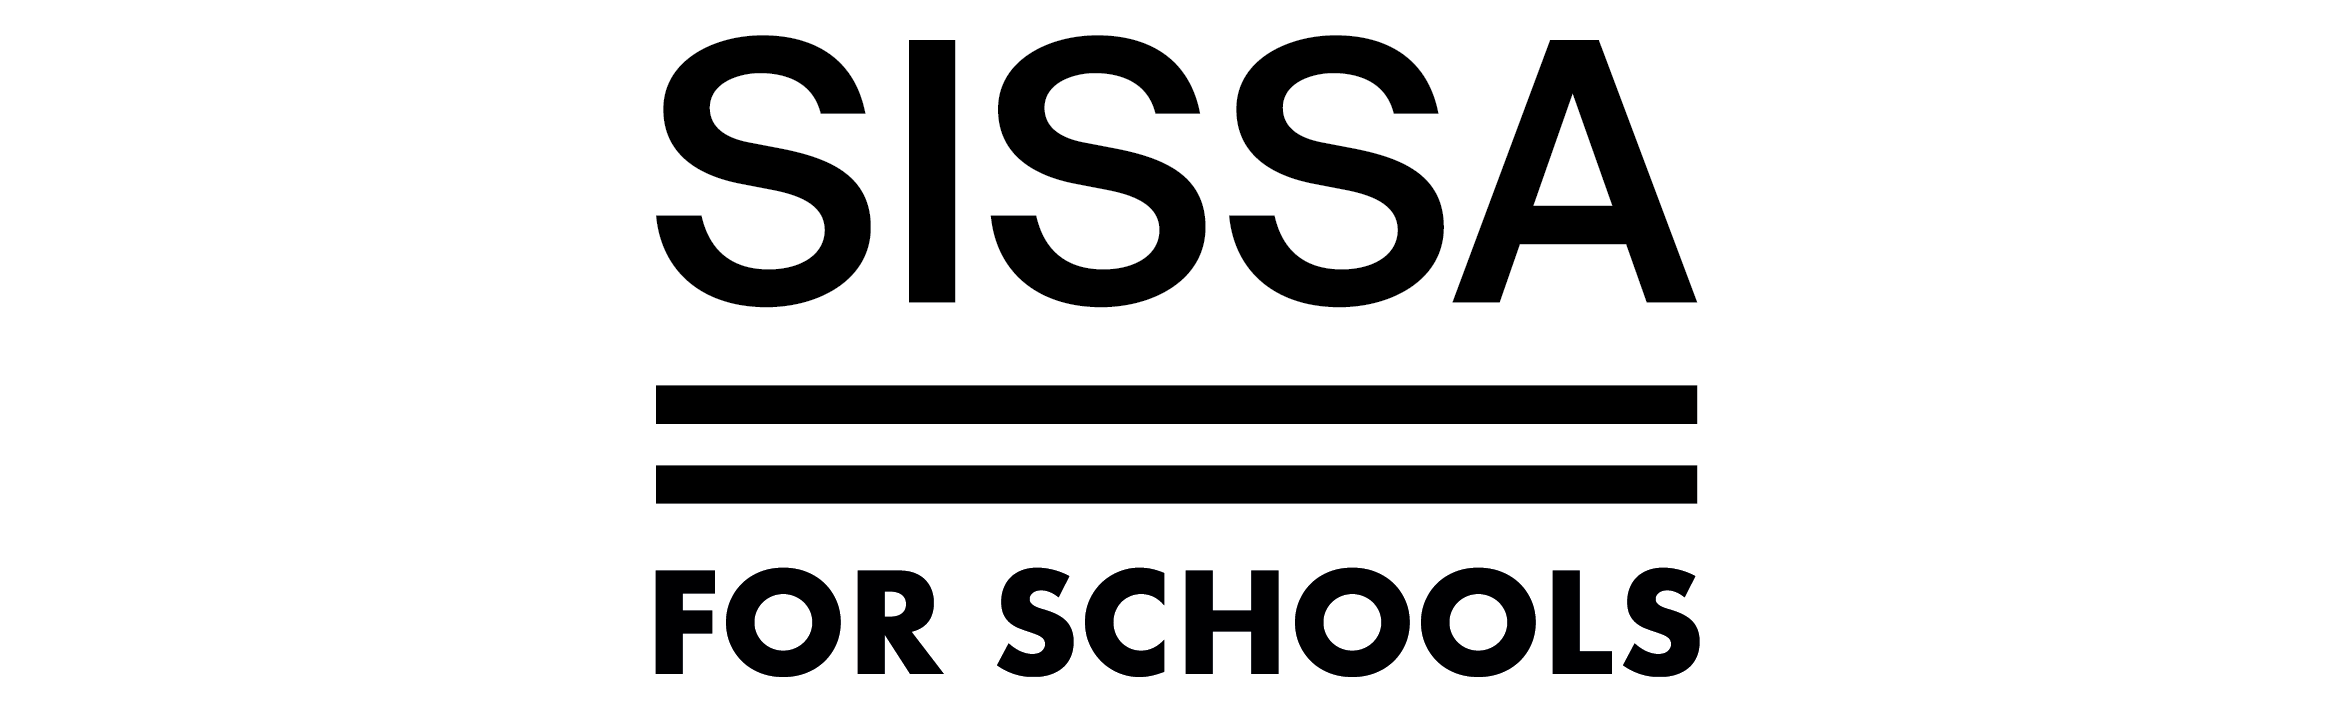 Sissa for Schools